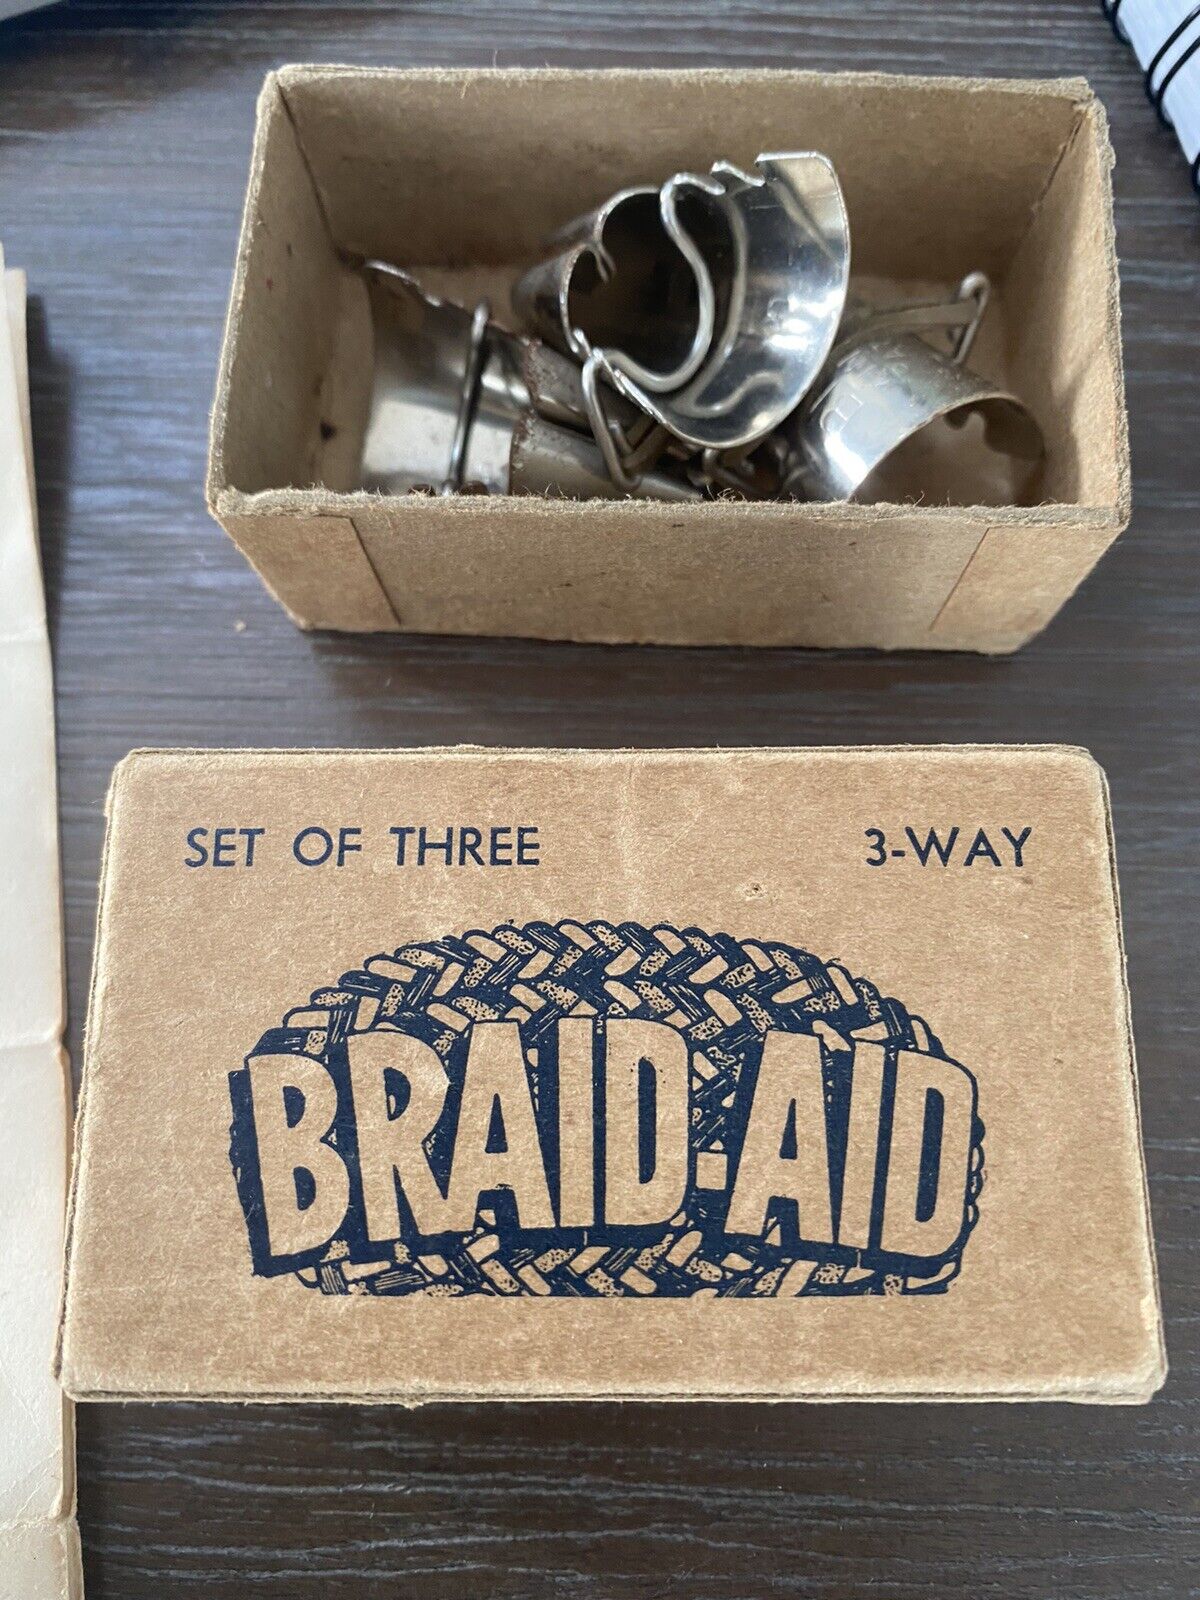 Braid-aid Rug Making Set Of 2 W Original Box 3-way Vintage Weaving Crafts